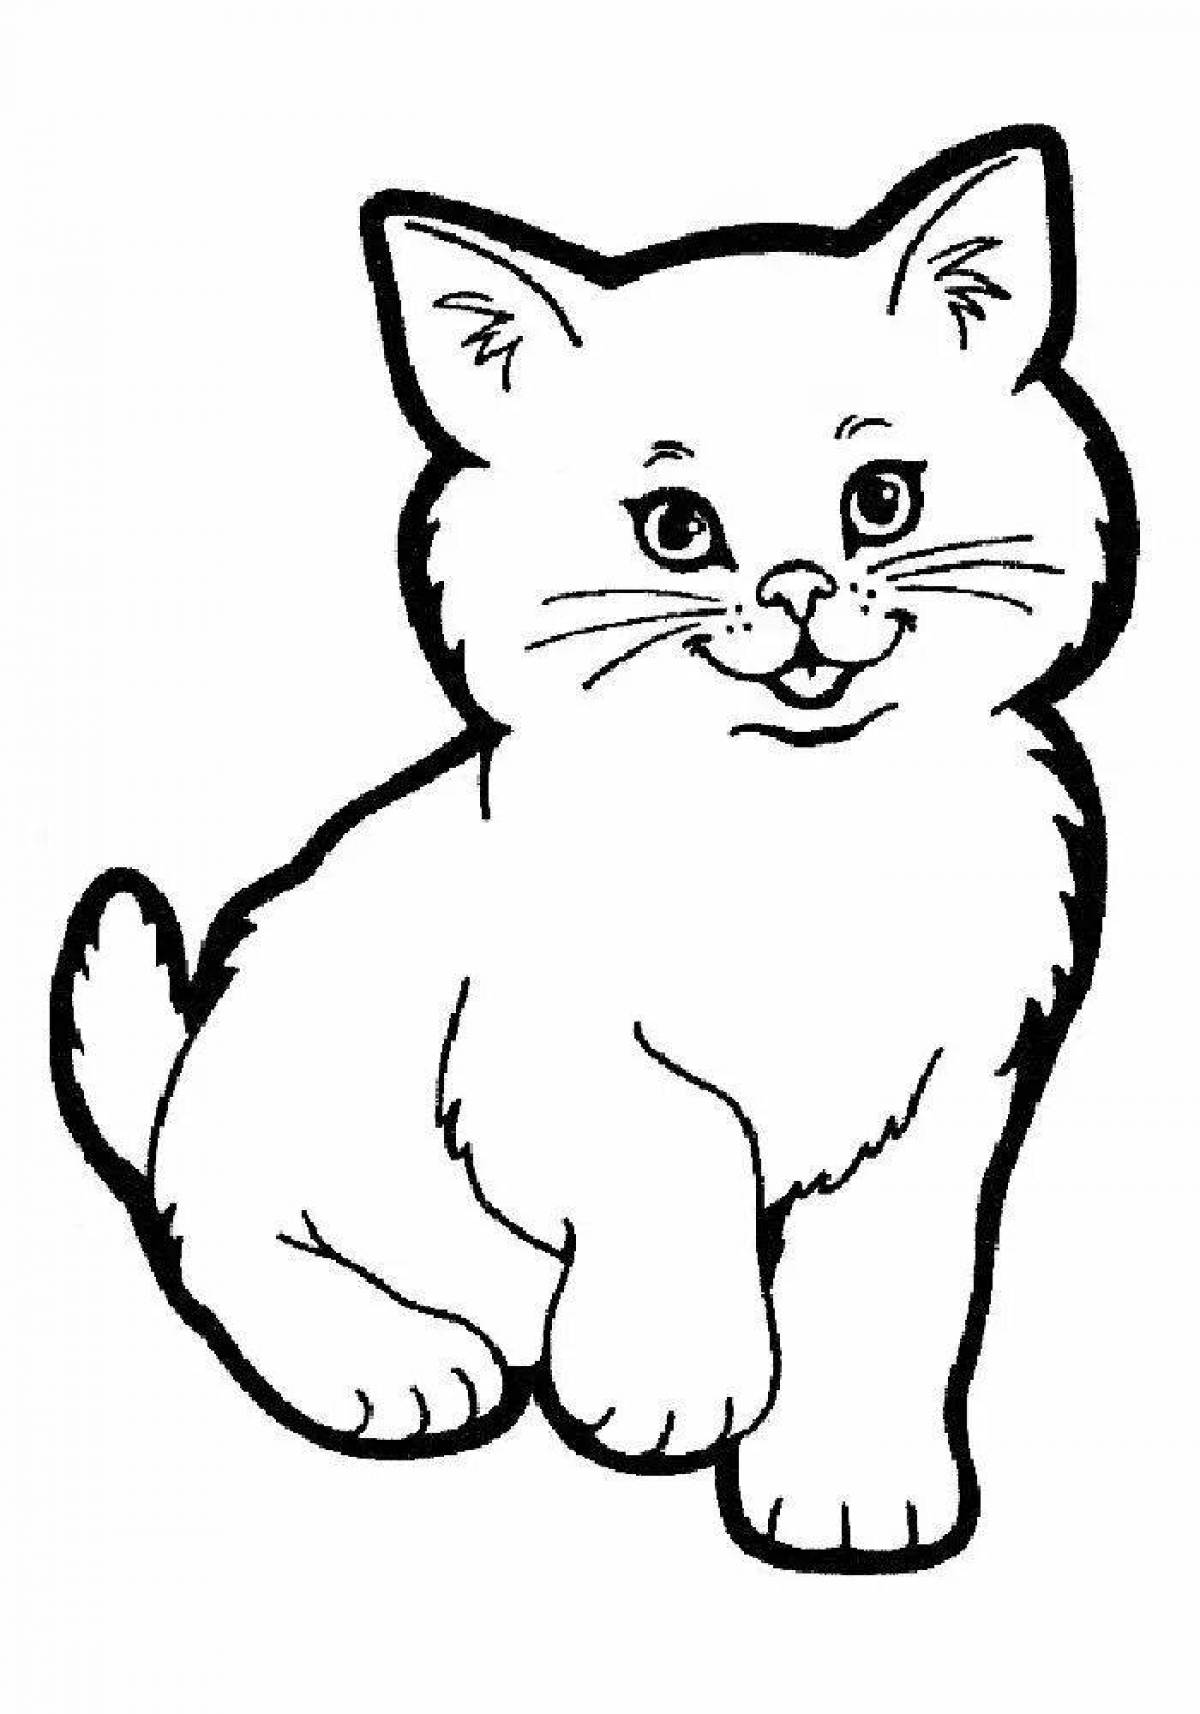 Юмористический рисунок кошки